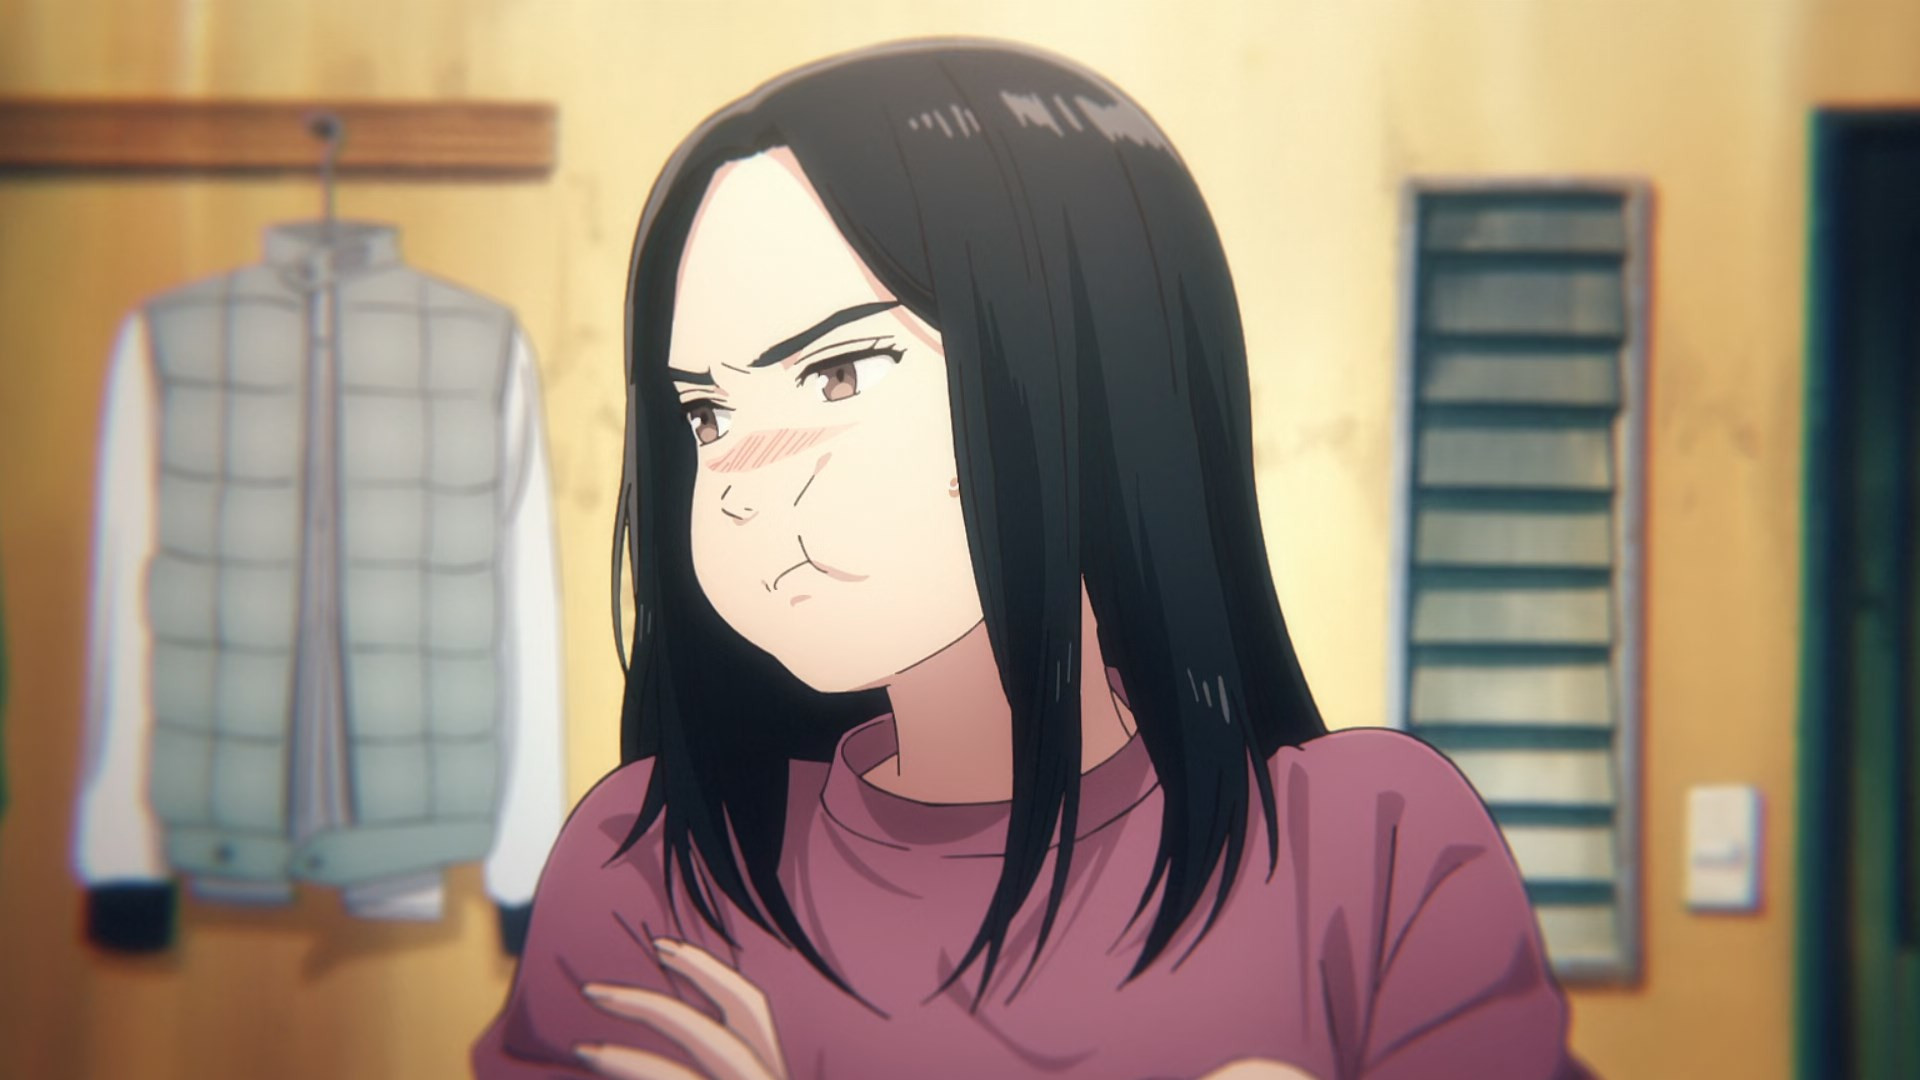 Hidden Gem Anime Series to Enjoy: 'Tengoku Daimakyou' - Black Nerd Problems